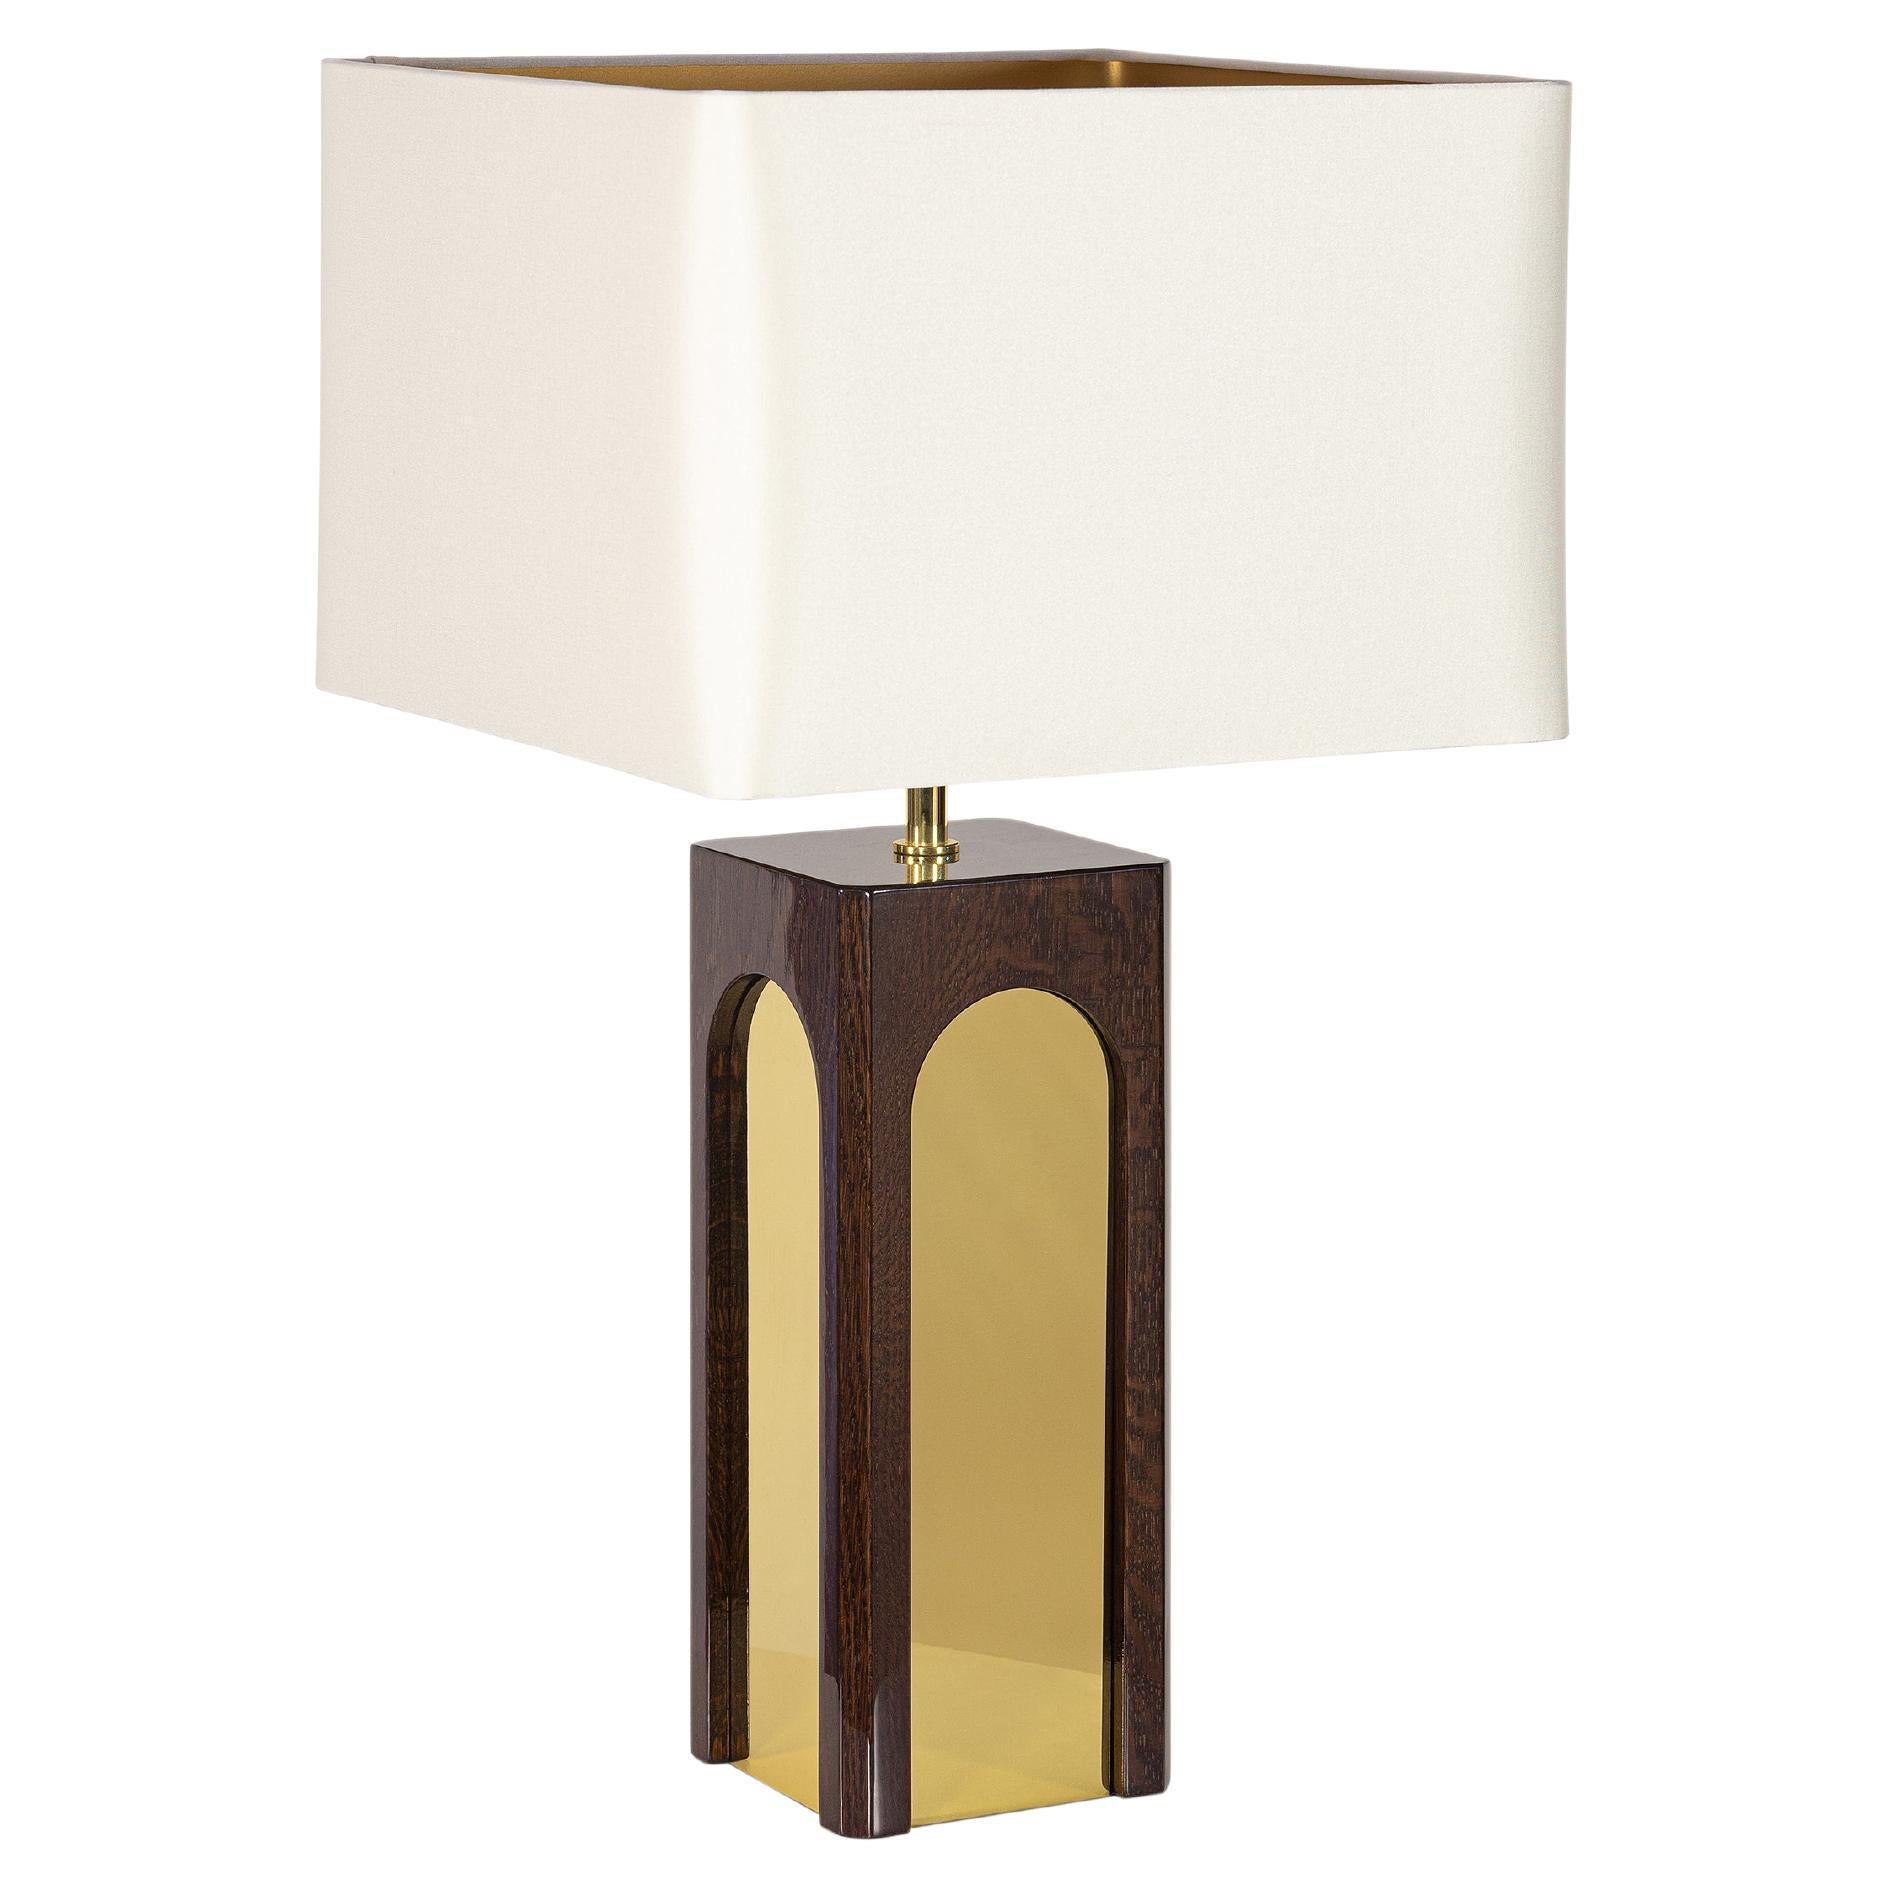 Metropolitan Oak Table Lamp by InsidherLand For Sale